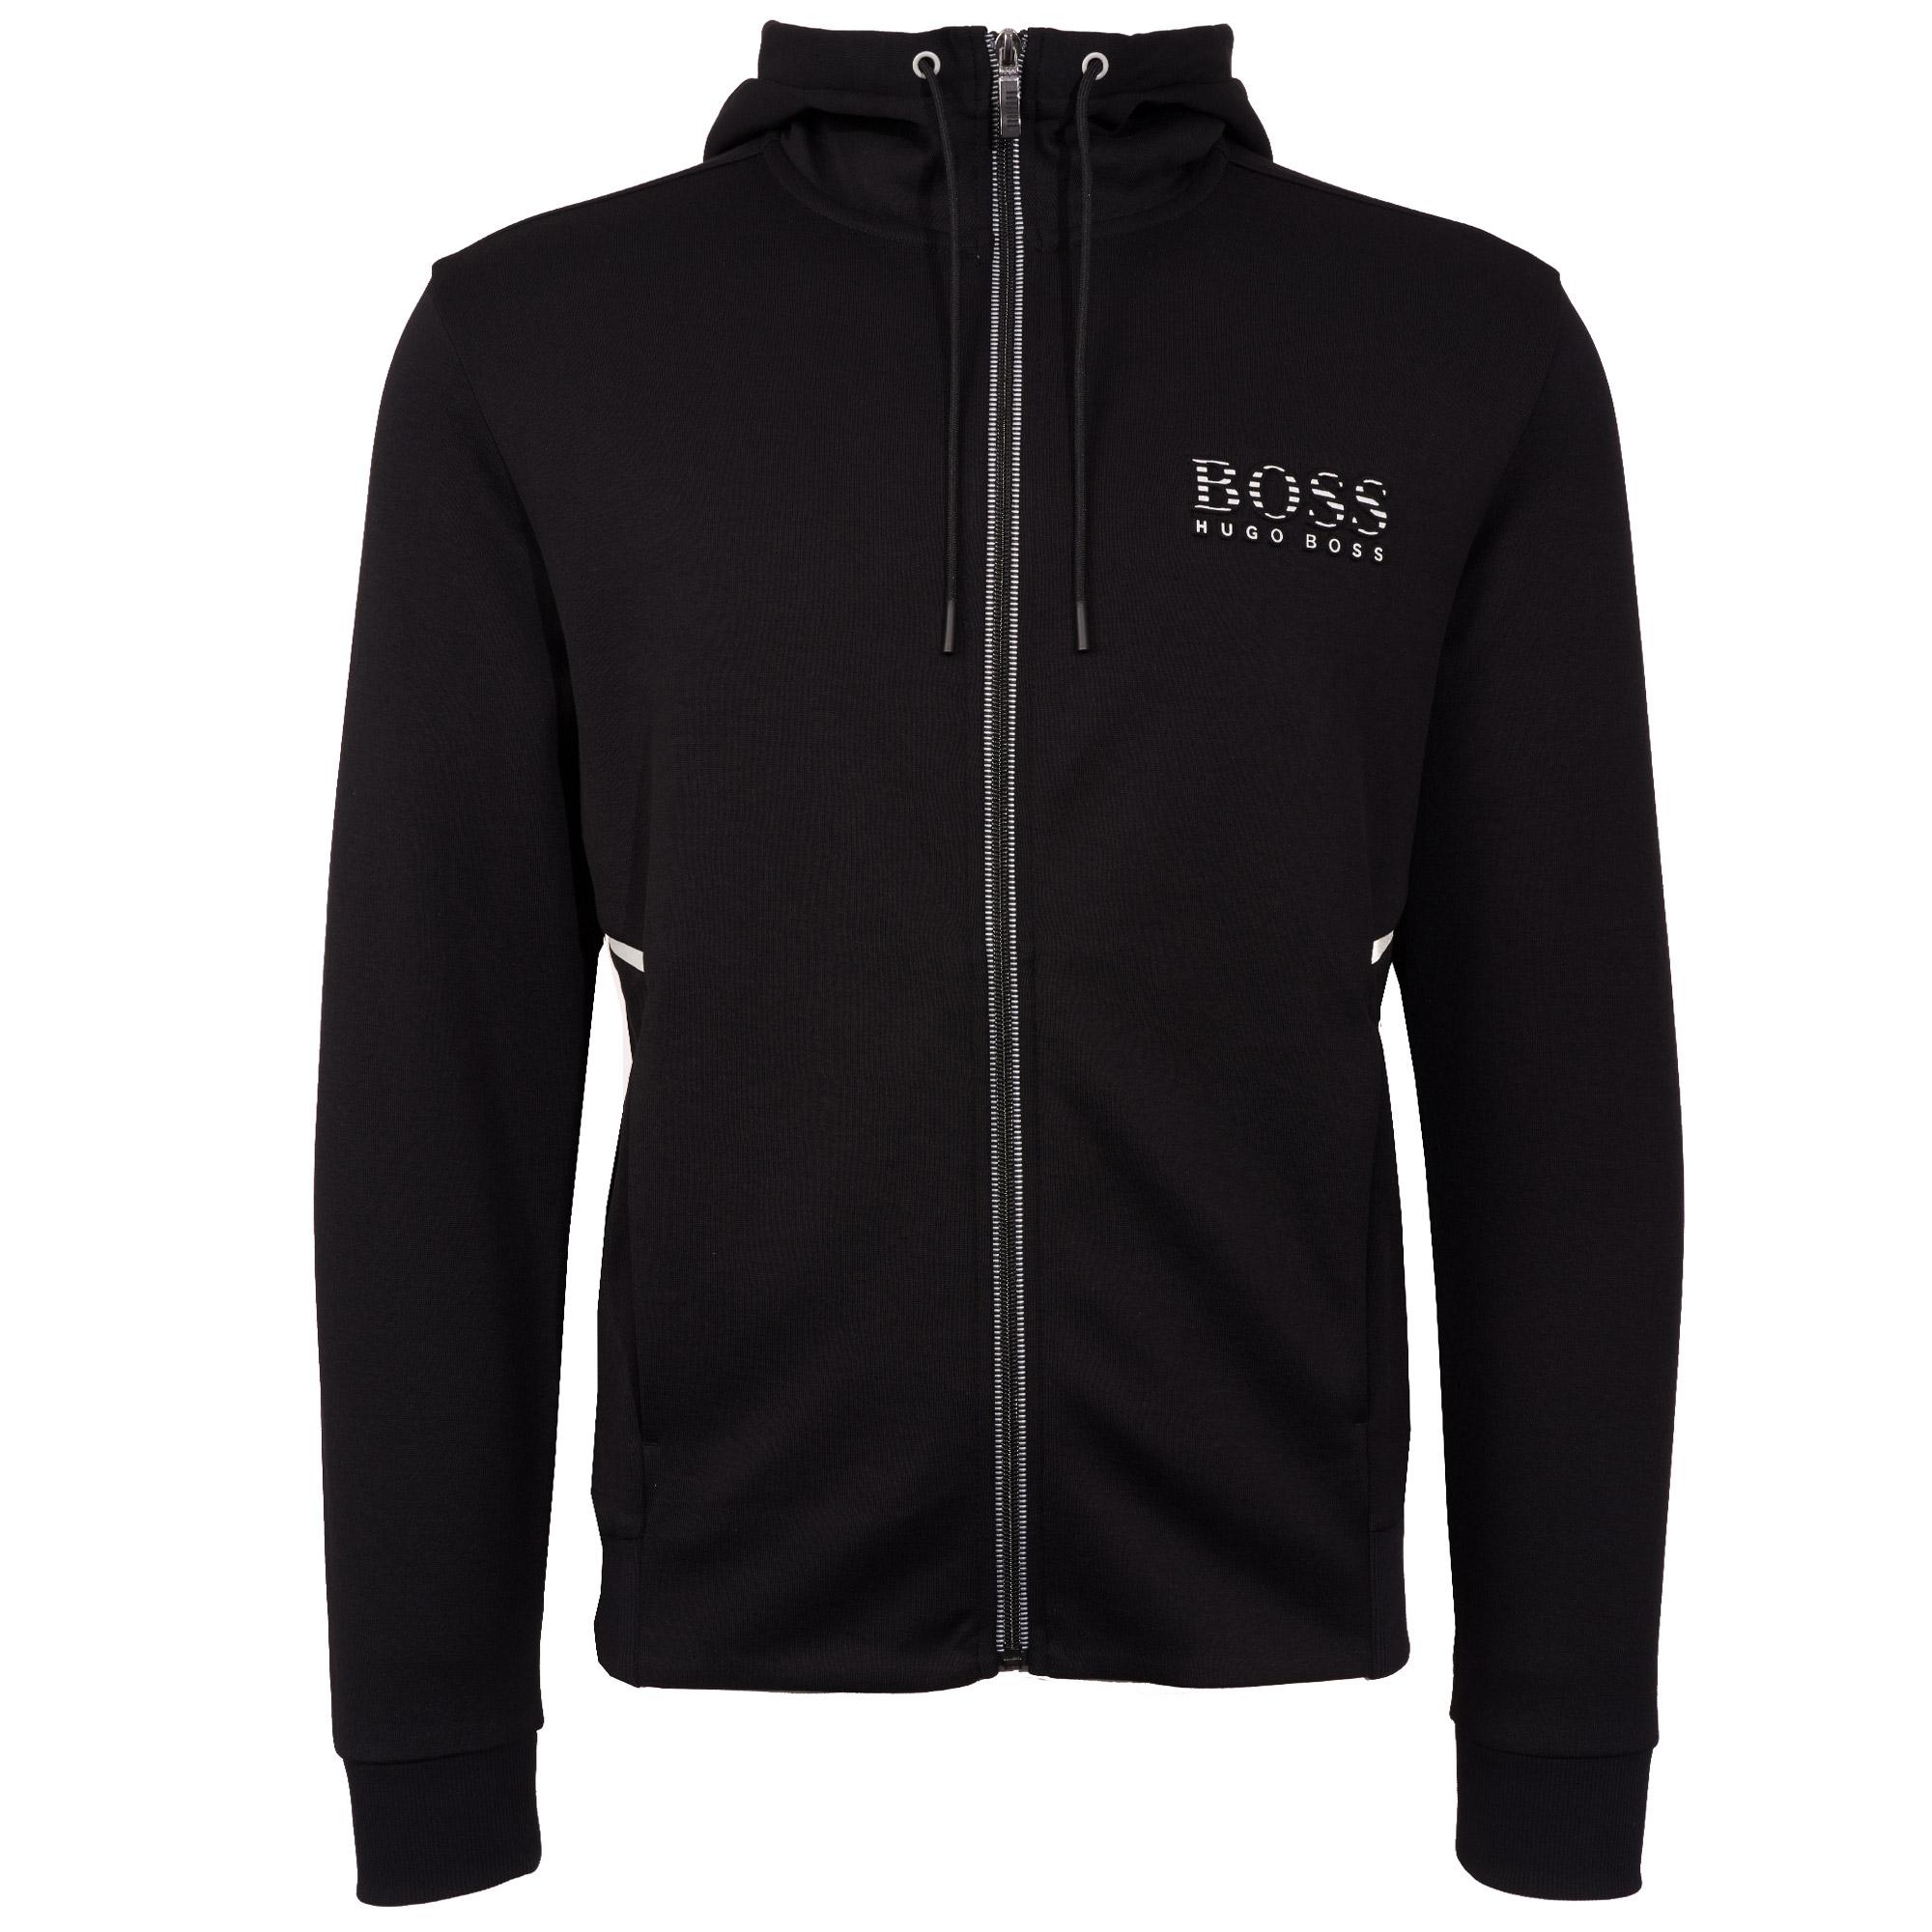 Lyst Boss Saggy Sweatshirt Black In Black For Men 